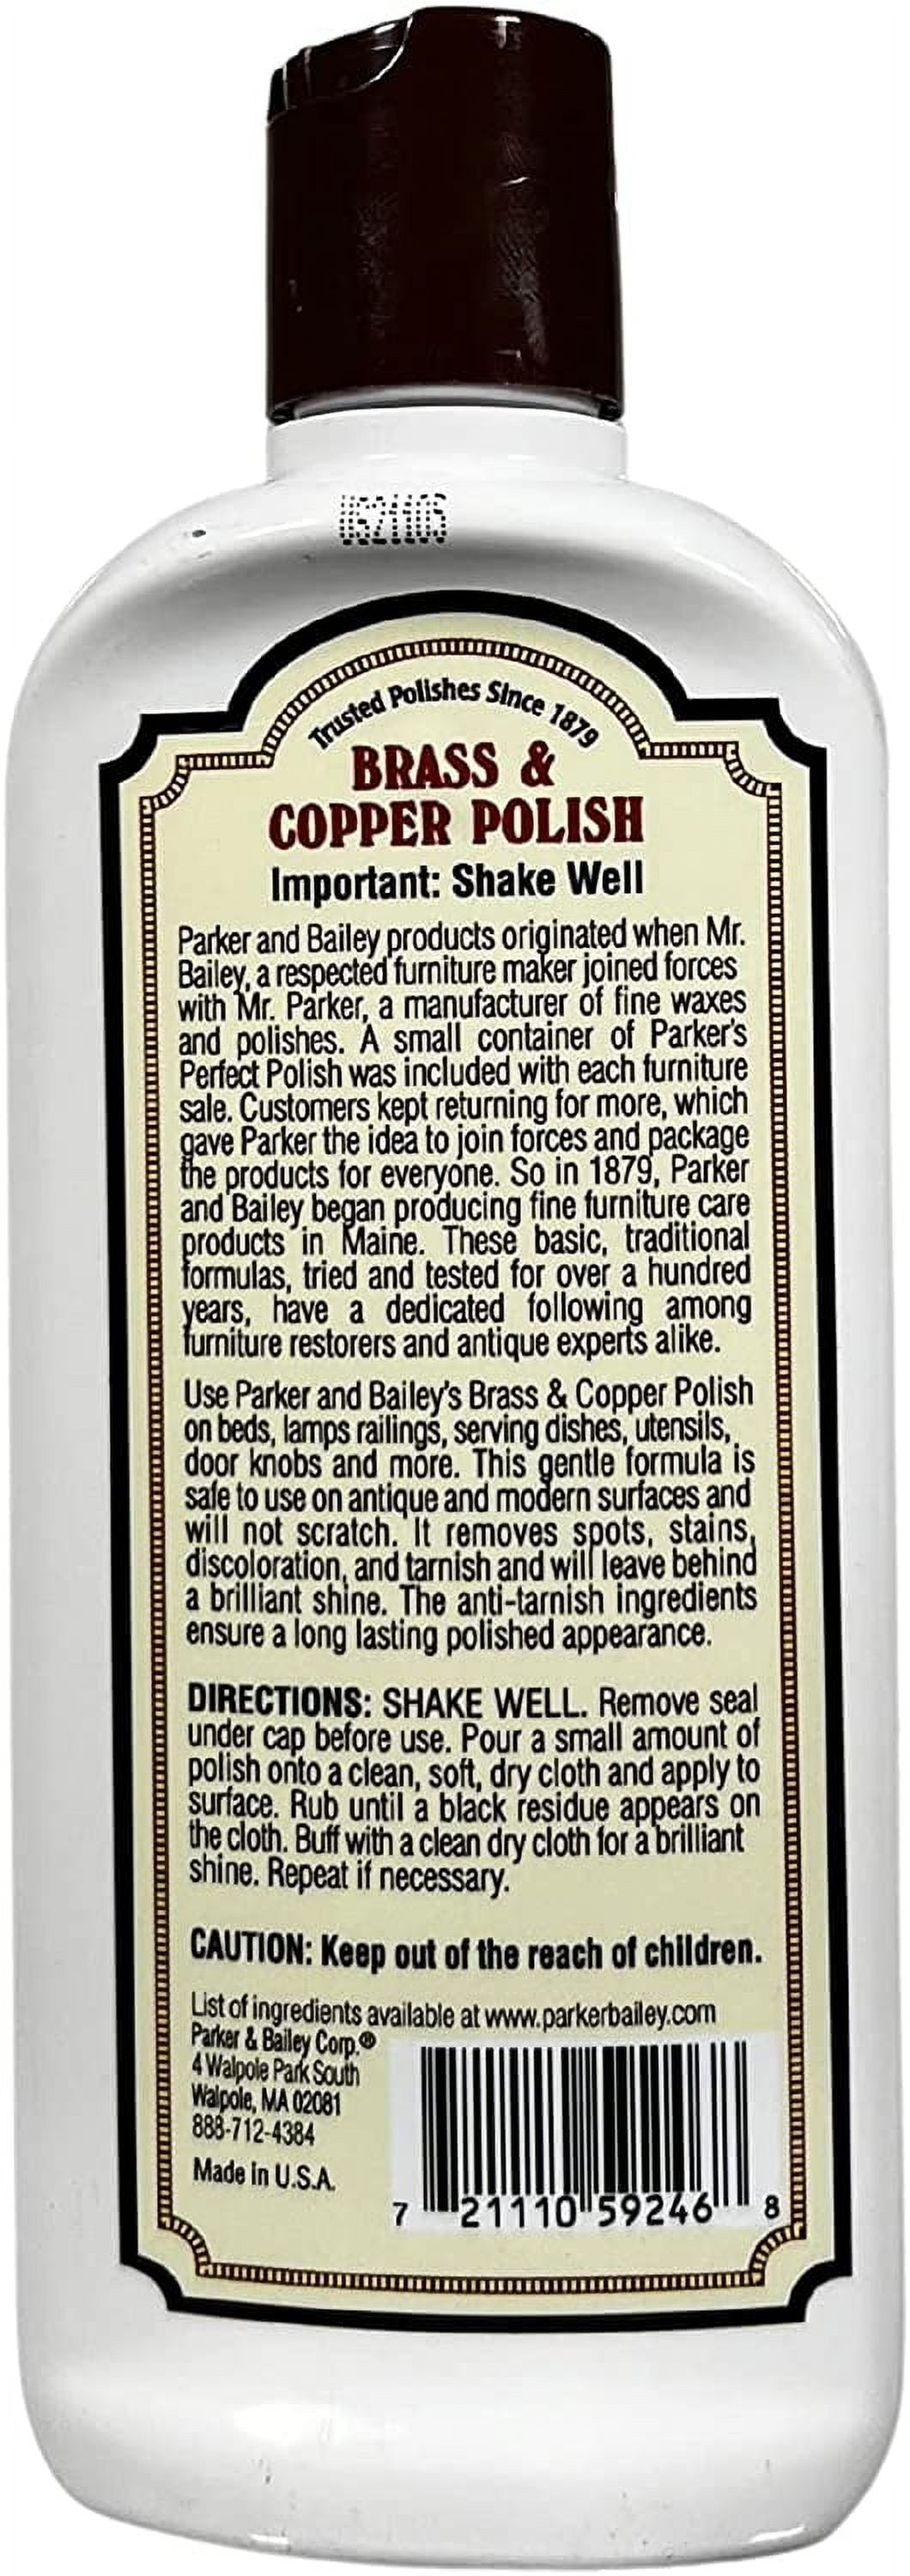 Parker & Bailey Brass & Copper Polish